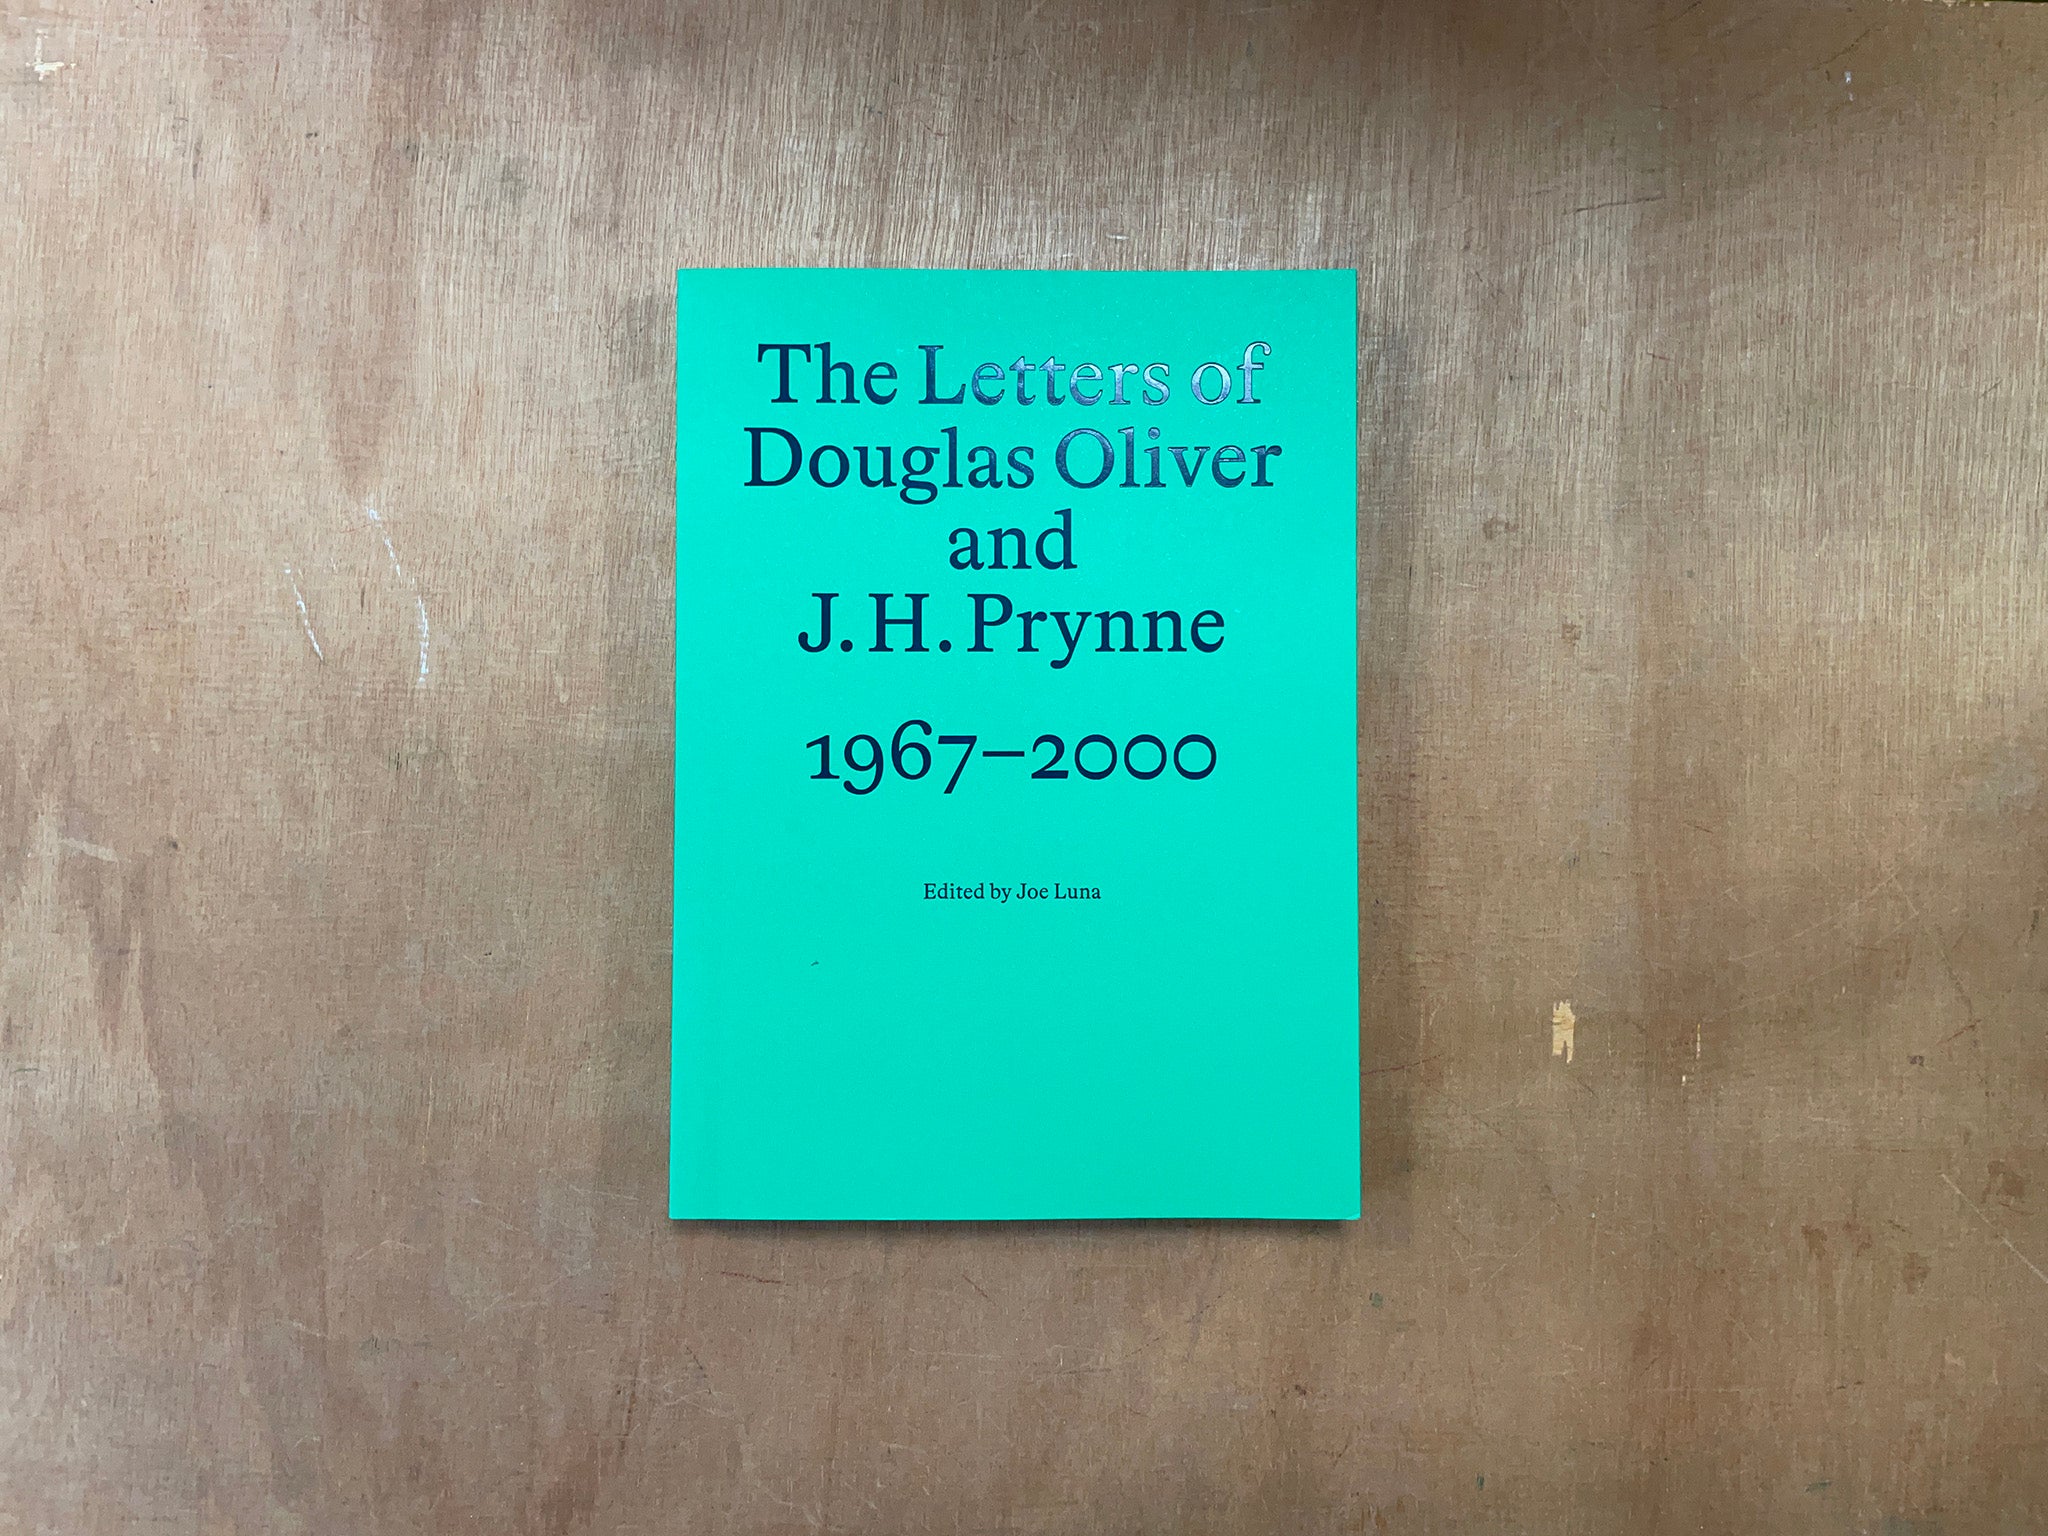 THE LETTERS OF DOUGLAS OLIVER AND J. H. PRYNNE, 1967-2000 Edited by Joe Luna